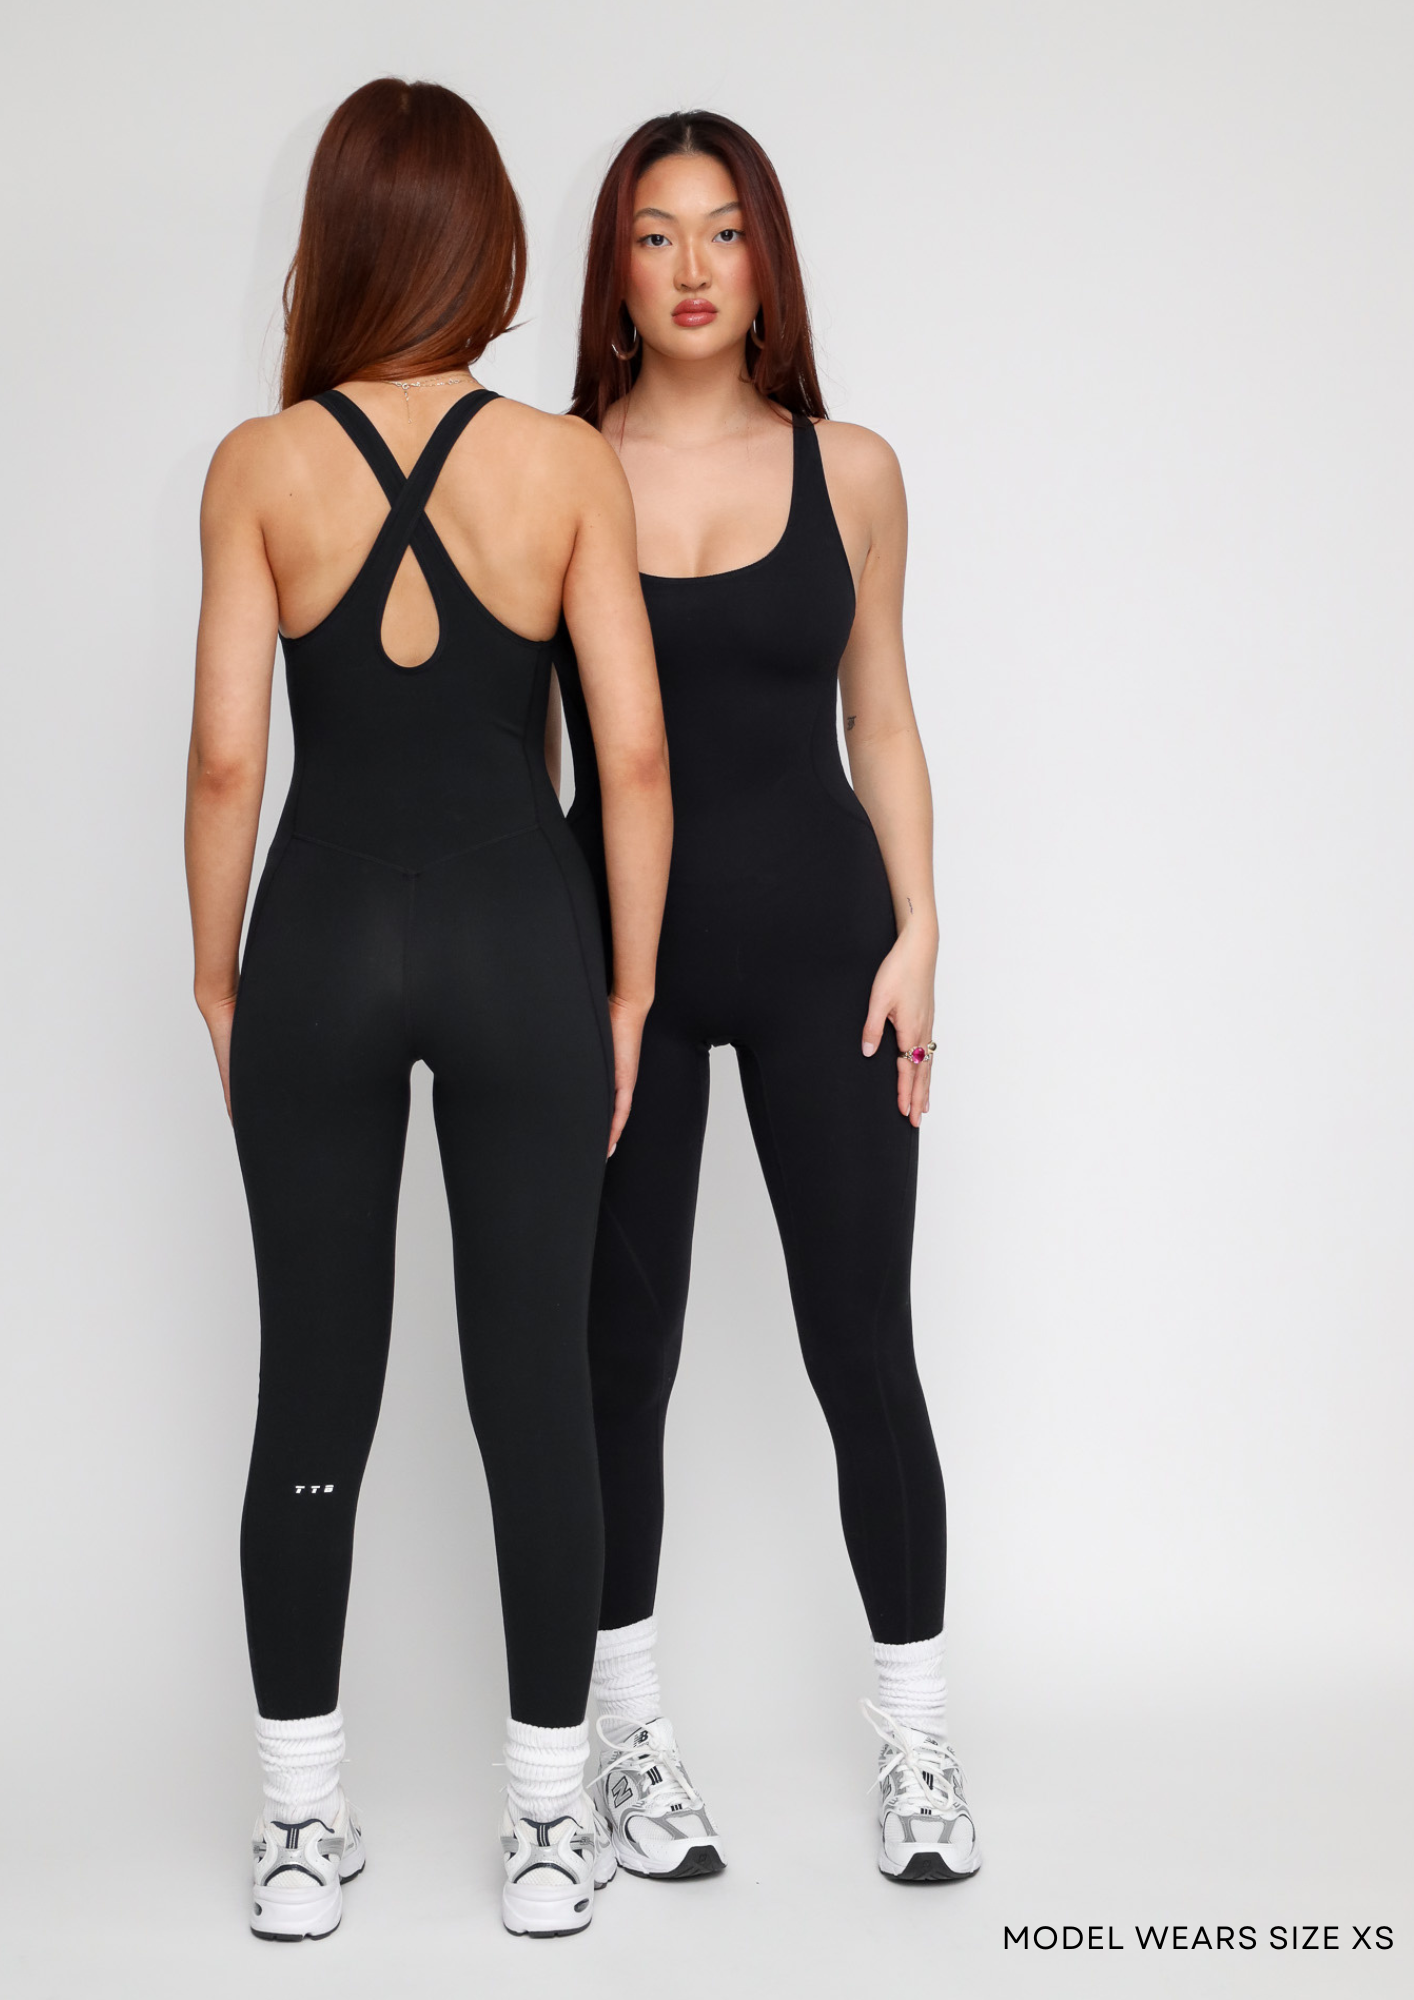 Leg Avenue 81585 Rasta Net Racer Back Bodysuit With Snap Crotch in Dresses,  MiniDresses & BodySuits - $31.99